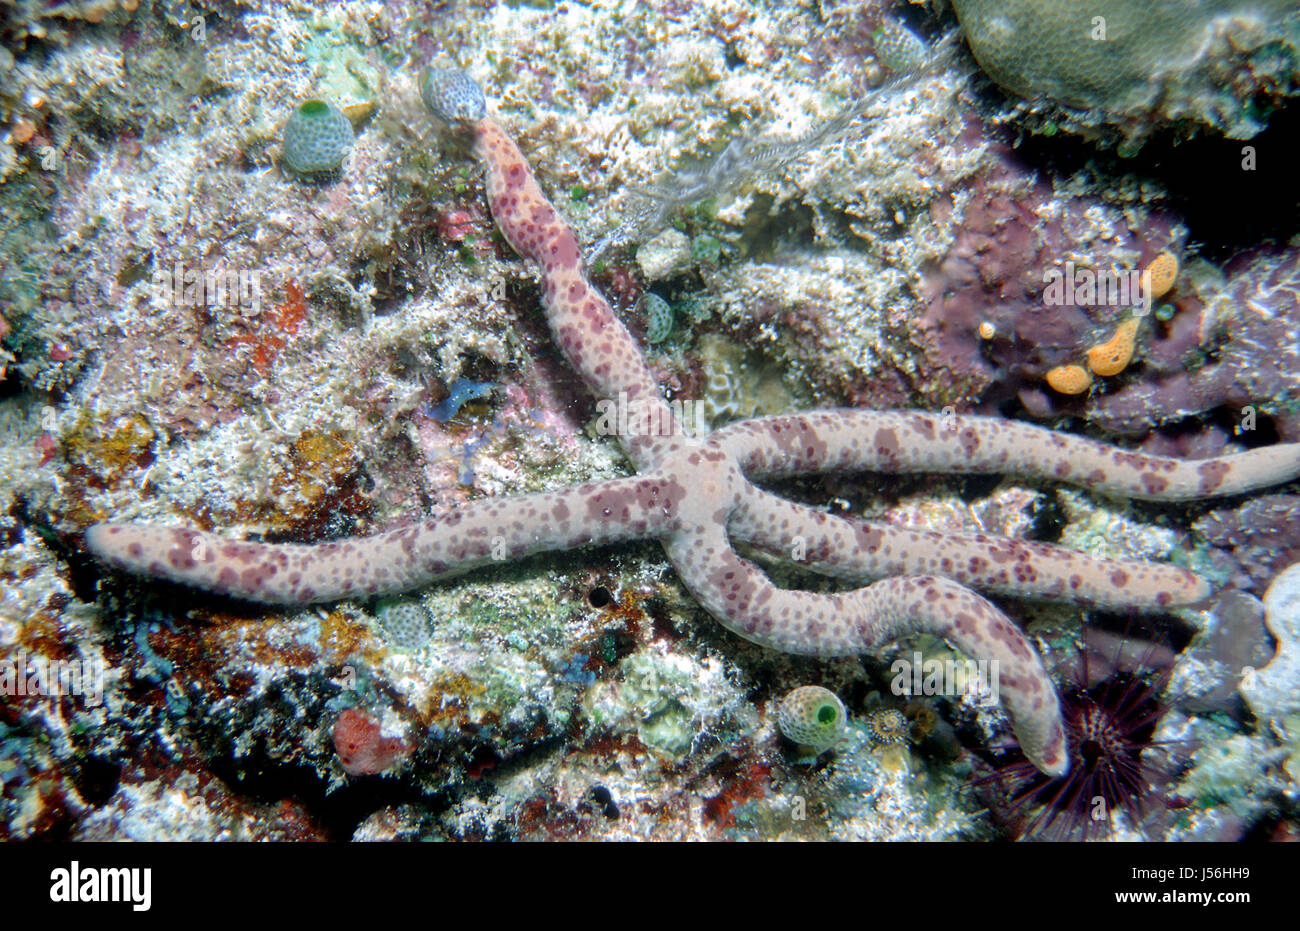 fish maldives dive pisces atoll reef sigma starfish symbiosis salt water sea Stock Photo